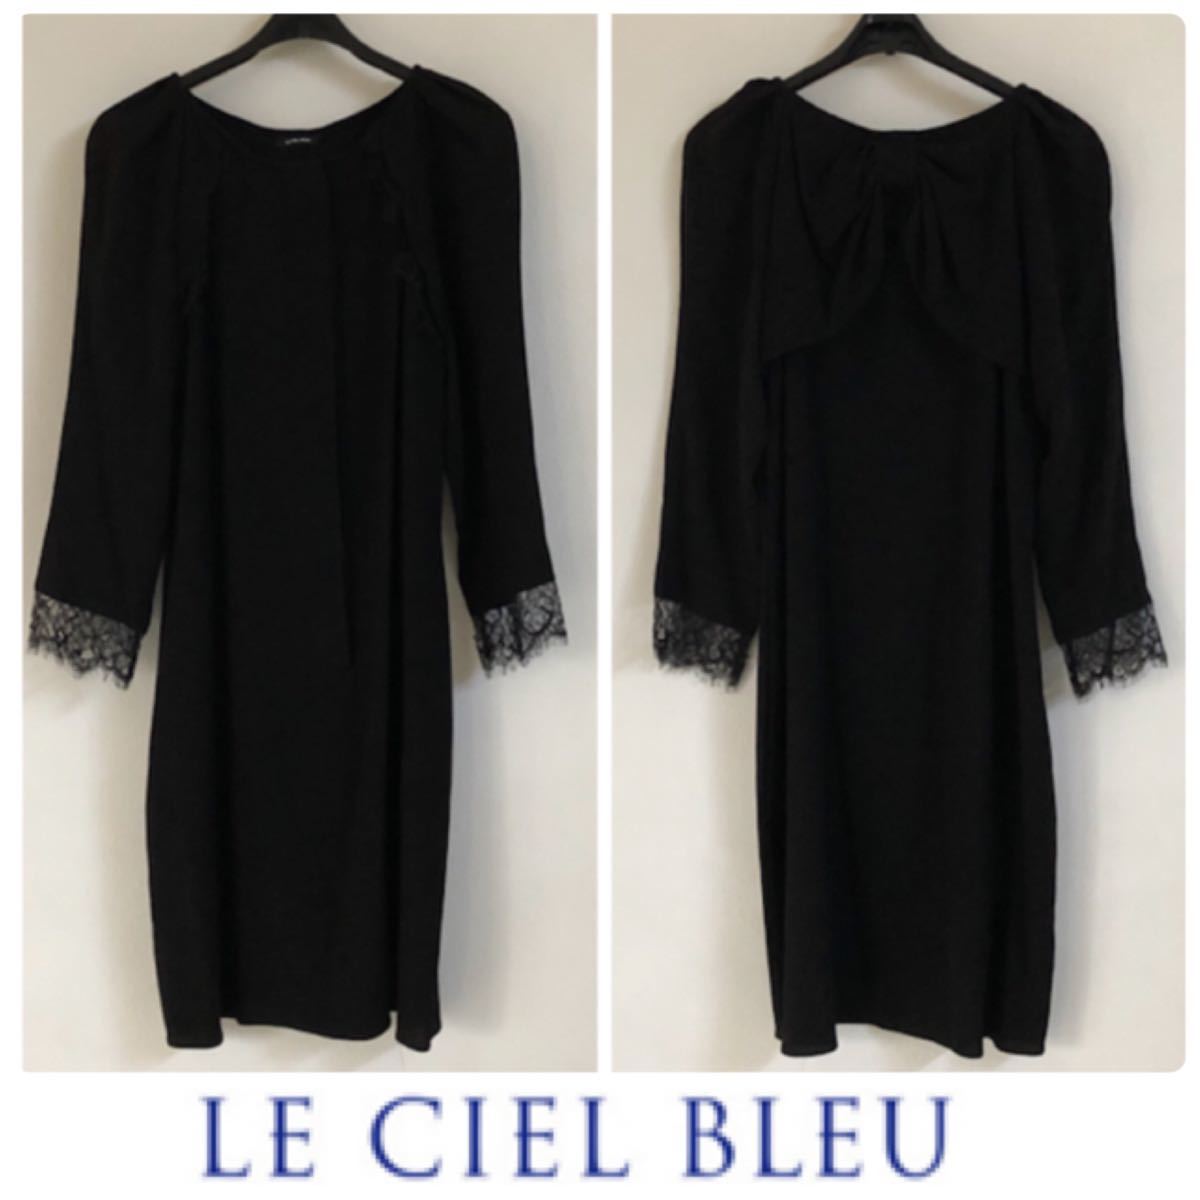  Le Ciel Bleu made in Japan back ribbon race One-piece 38 black black knees on miniskirt Mini One-piece 